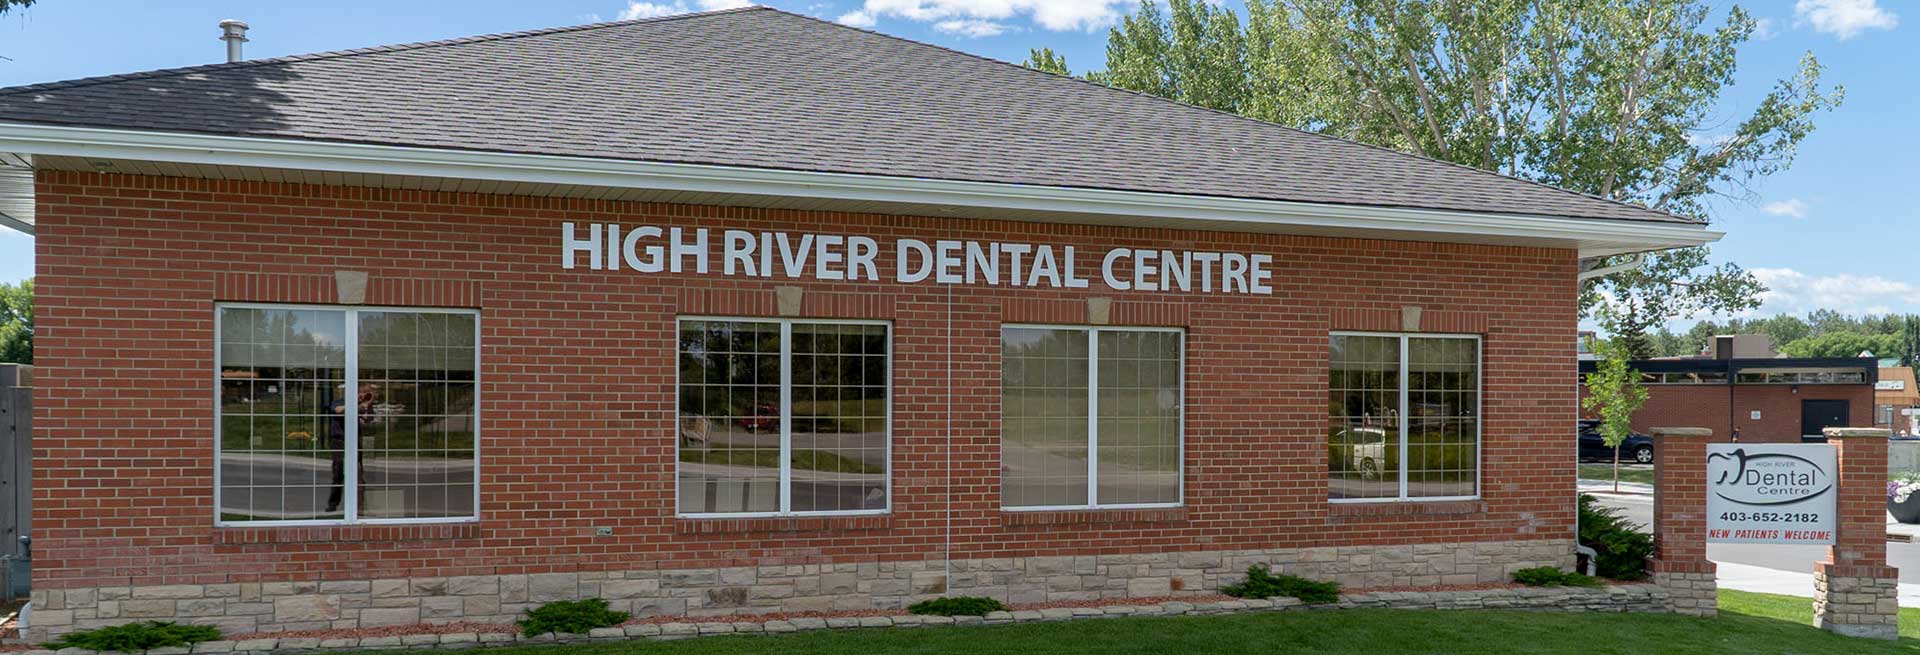 High River Dental Centre Exterior | High River, Alberta